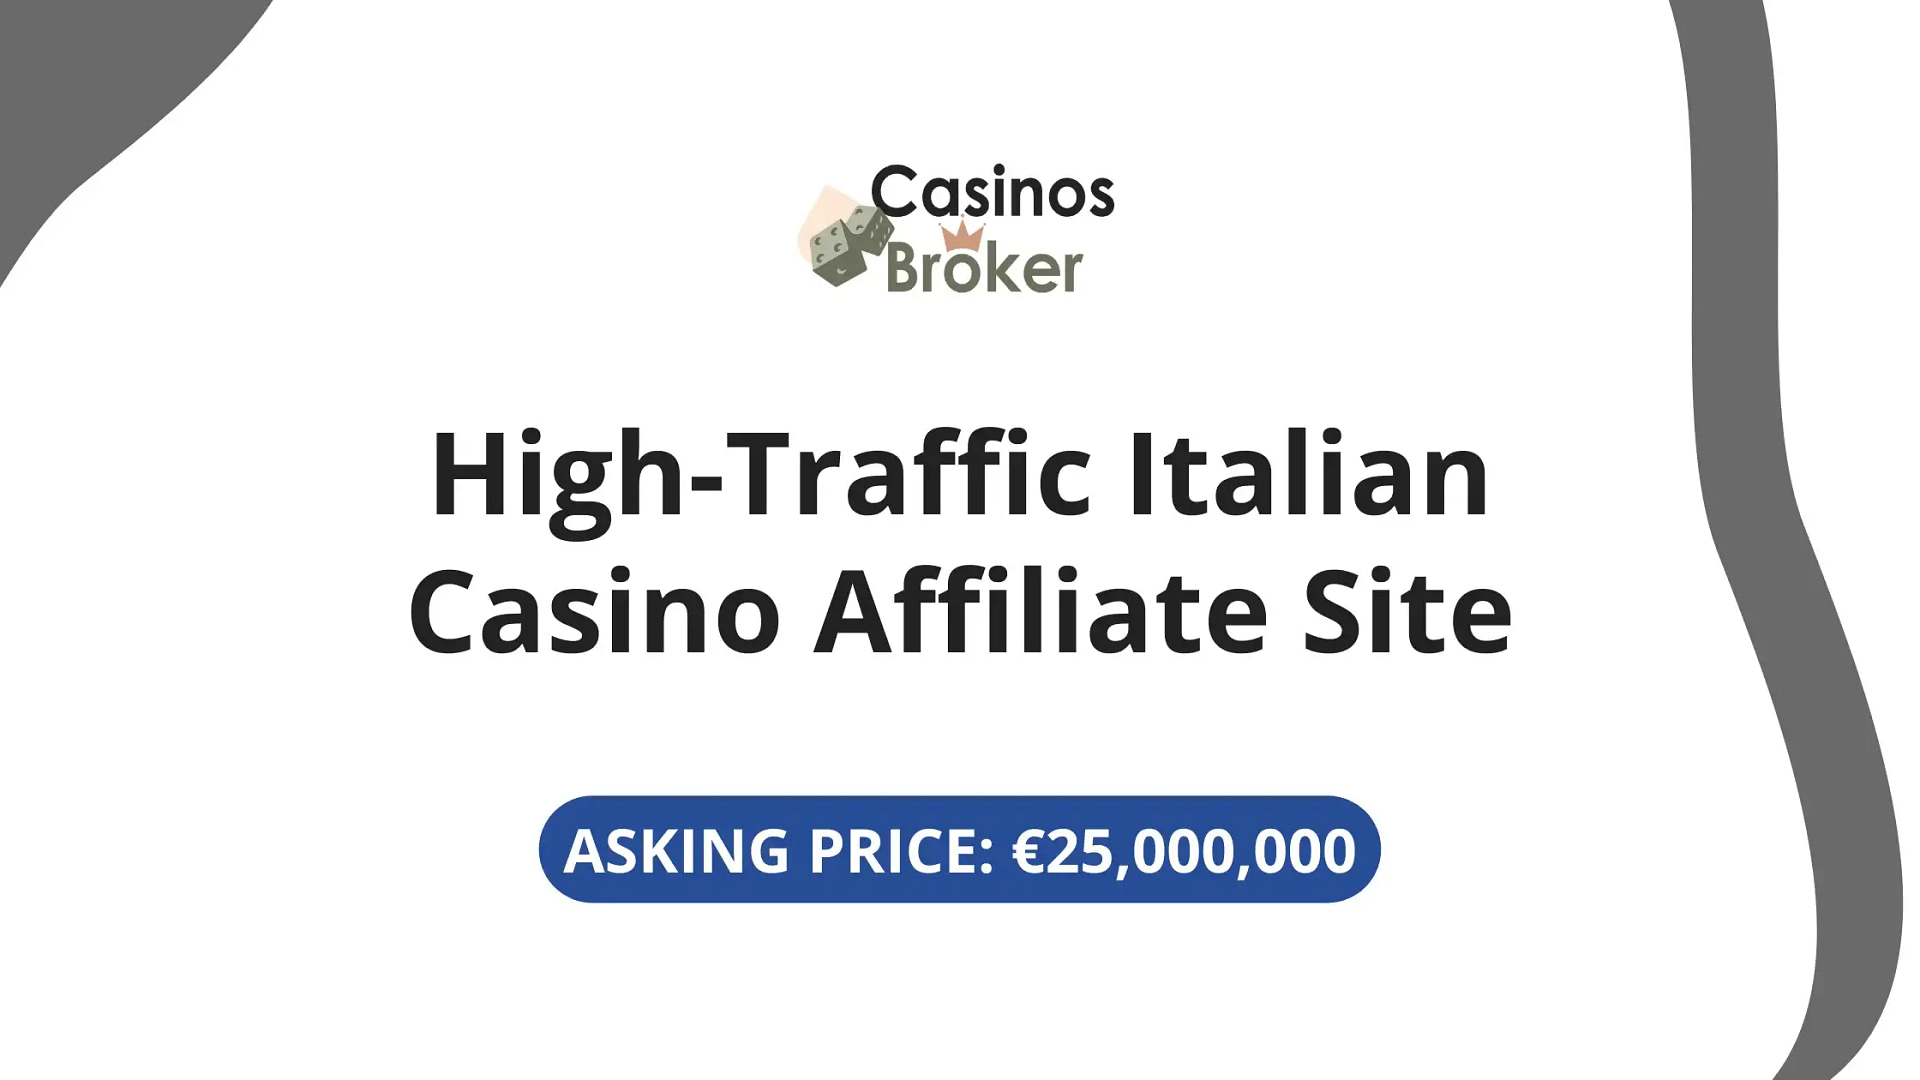 High-Traffic Italian Casino Affiliate Site - Asking price €25,000,000